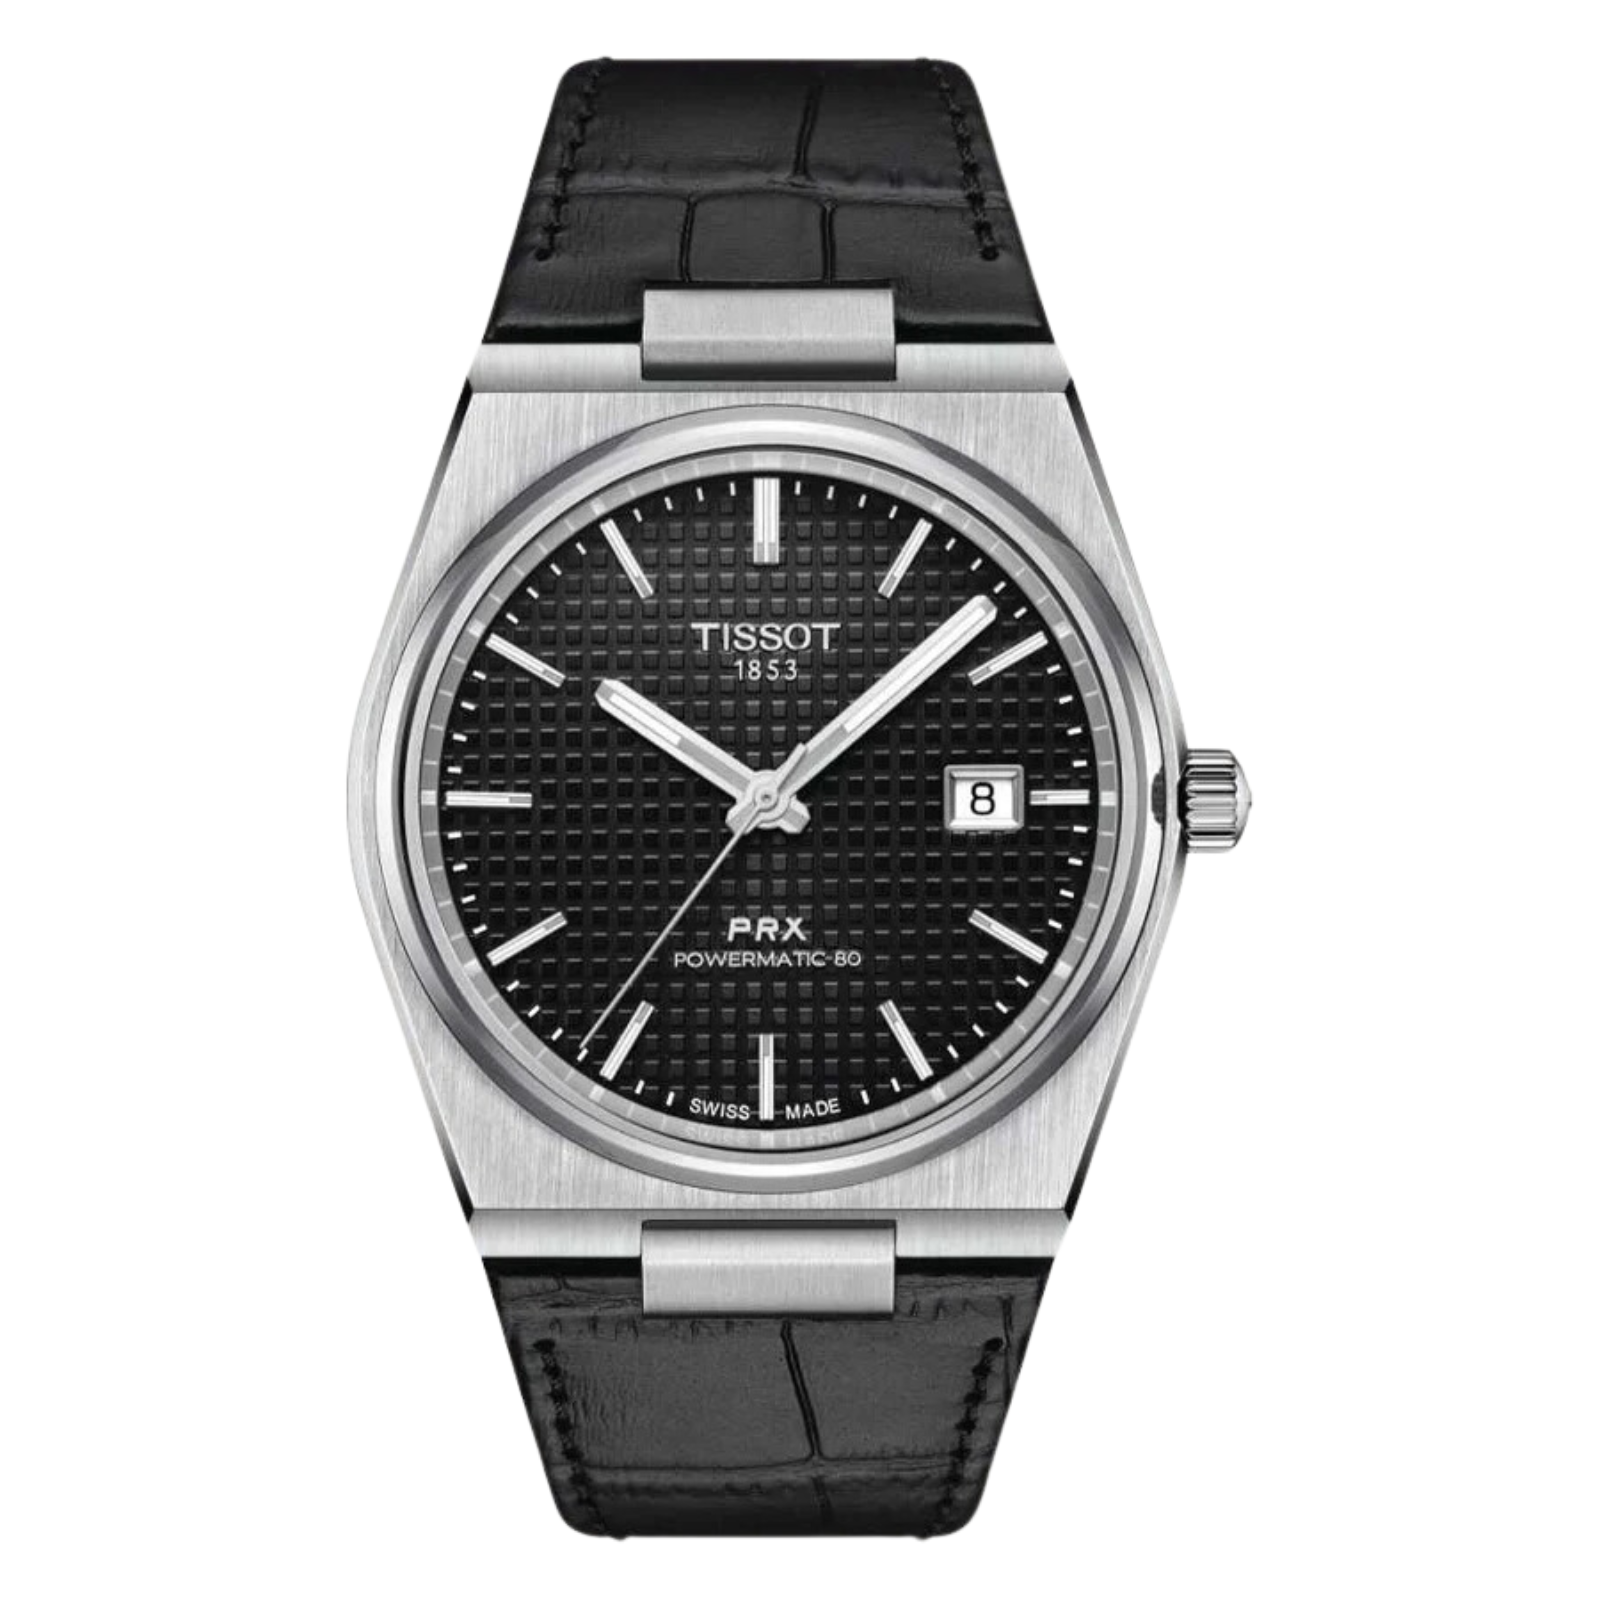 Tissot 1853 PRX Powermatic 80 T1374071605100 T137.407.16.051.00 Black Dial Watch